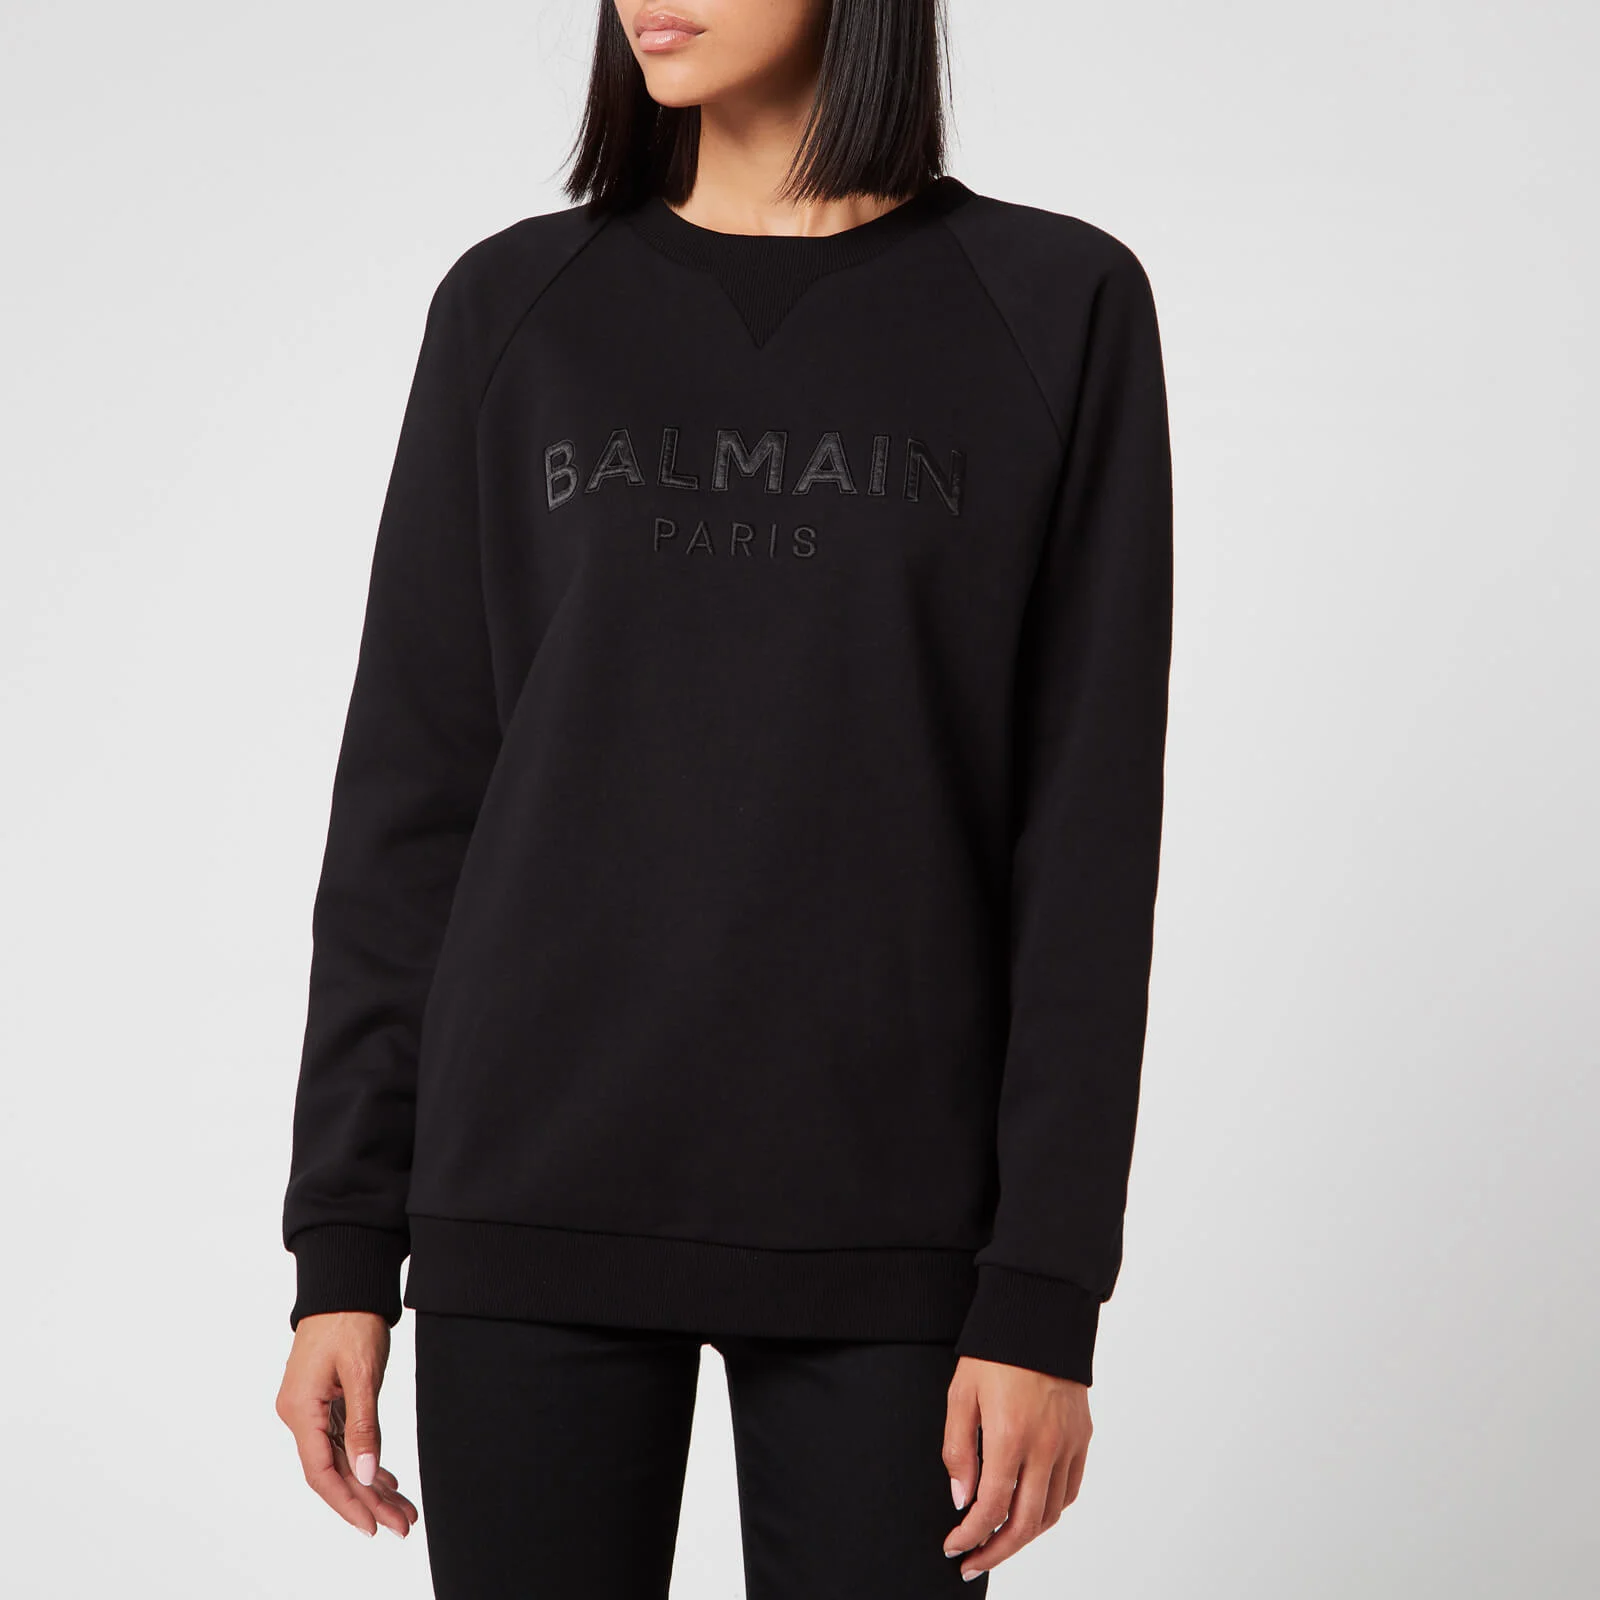 Balmain Women's Satin Logo Sweatshirt - Black Image 1